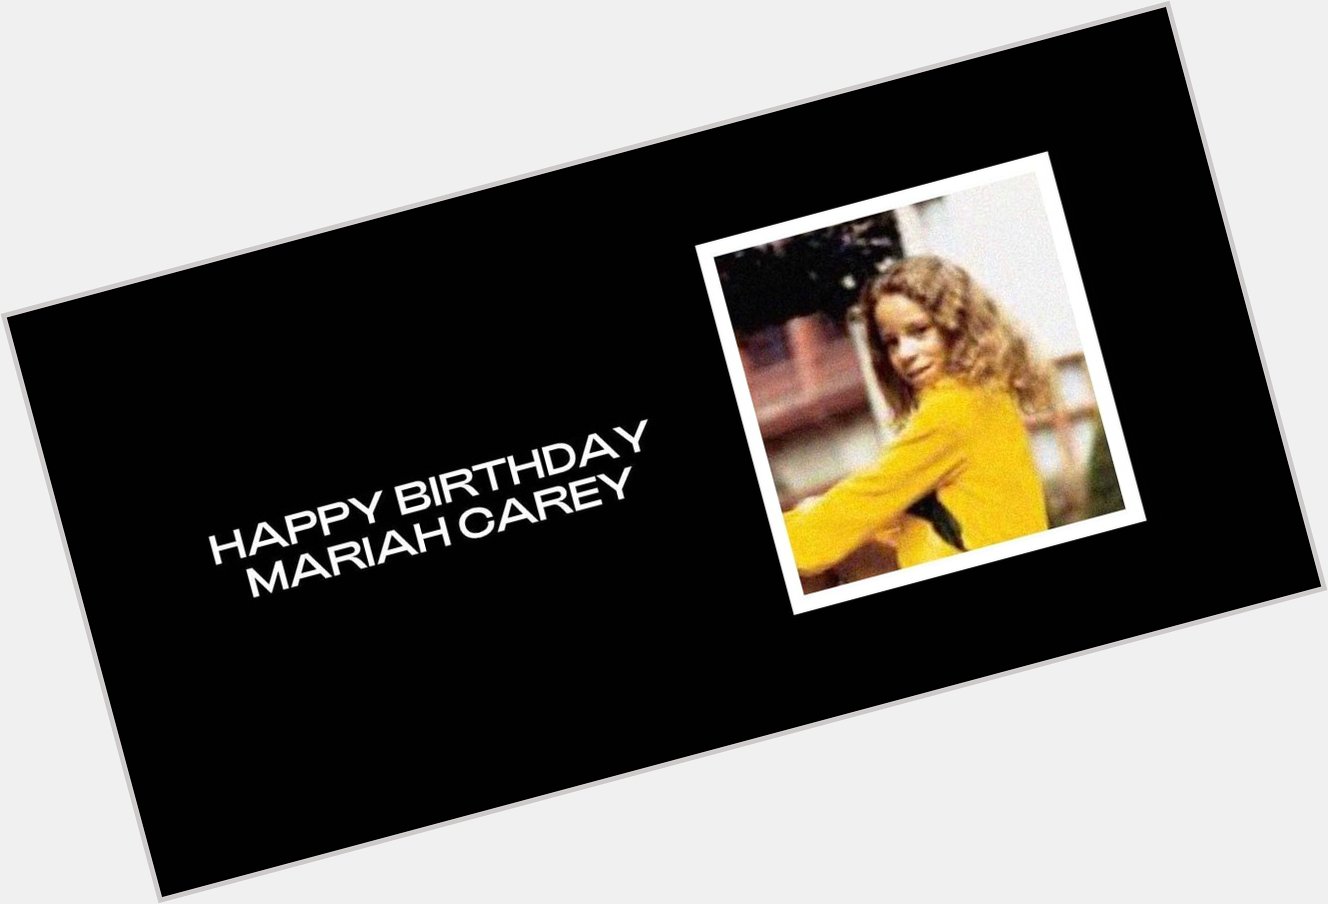  Happy Birthday Mariah Carey & Halle Bailey  